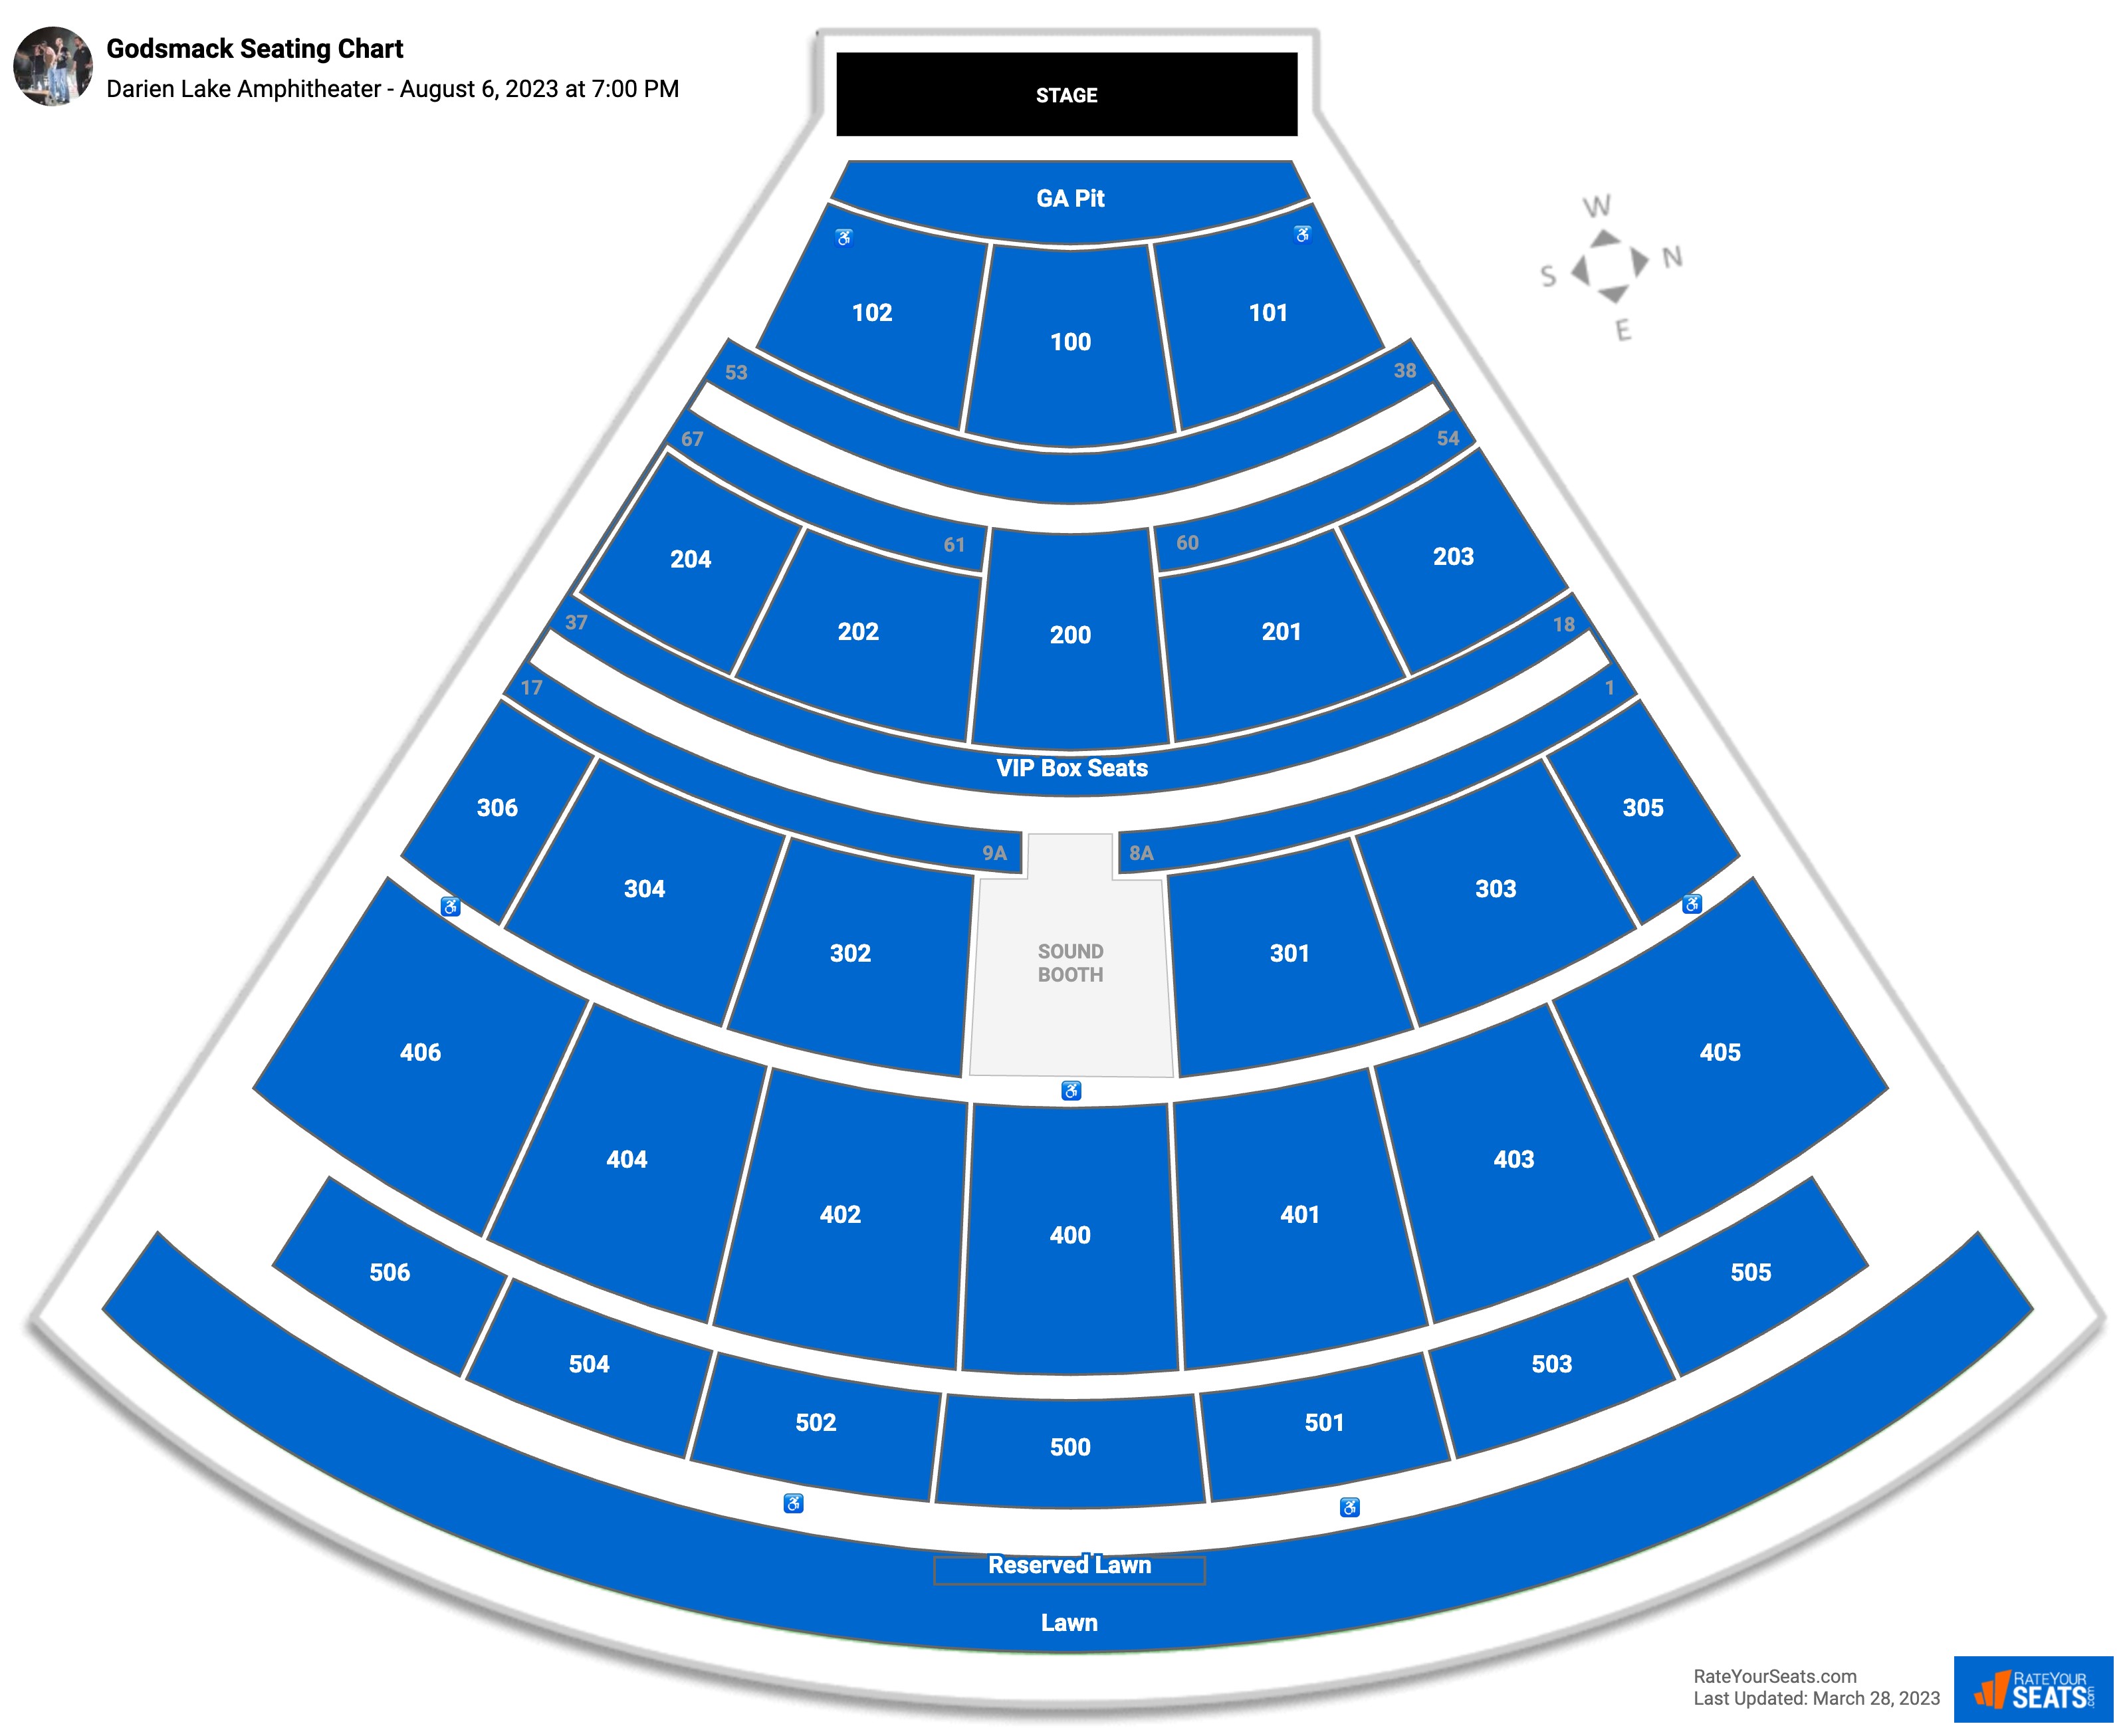 Darien Lake Amphitheater Seating Chart - RateYourSeats.com